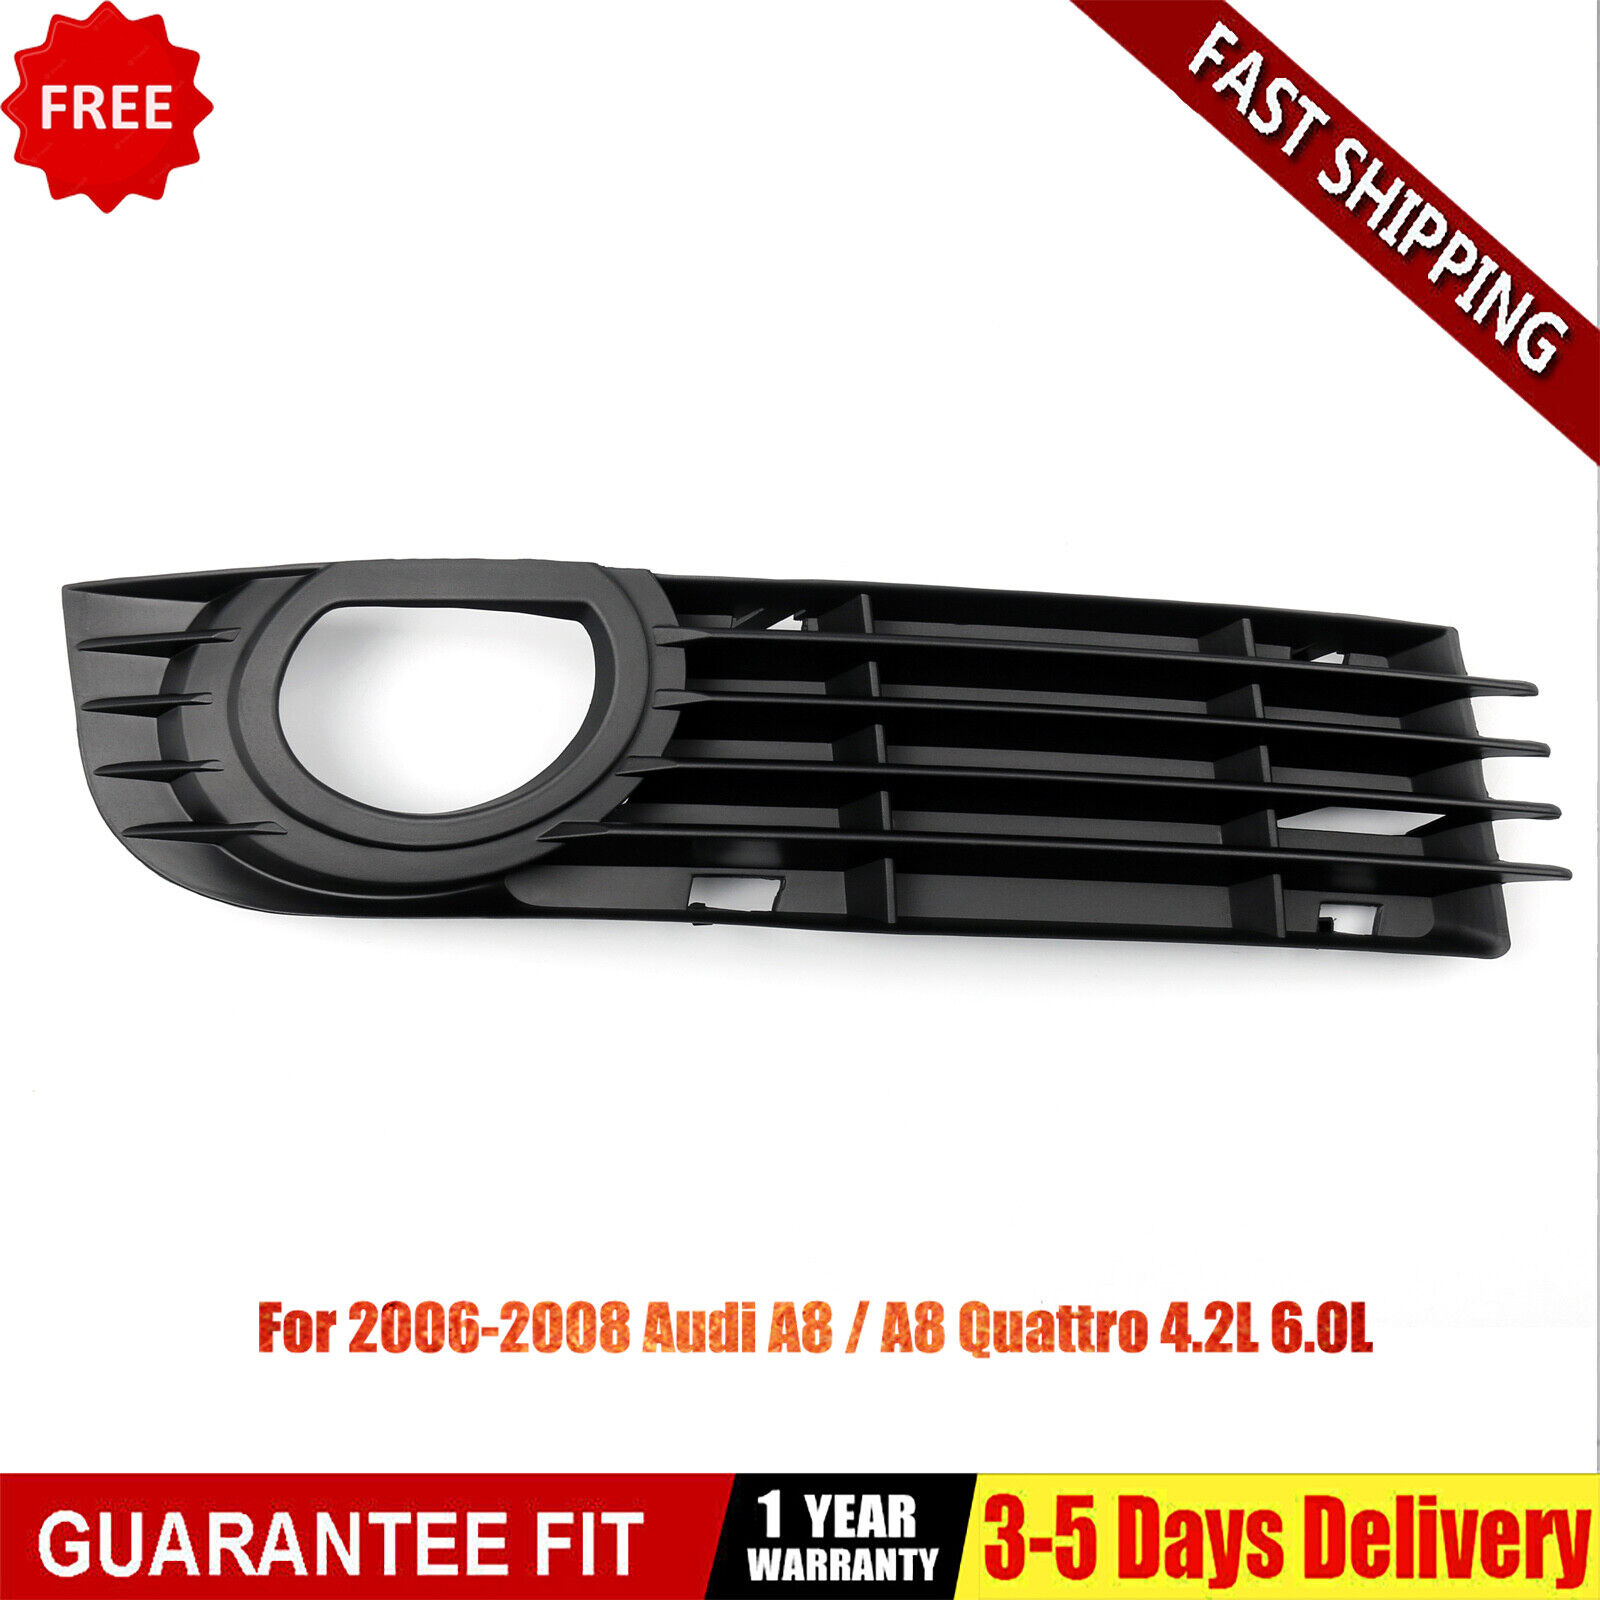 Front Right Lower Fog Light Bumper Grill for Audi A8& A8 Quattro 06-08 4.2L 6.0L